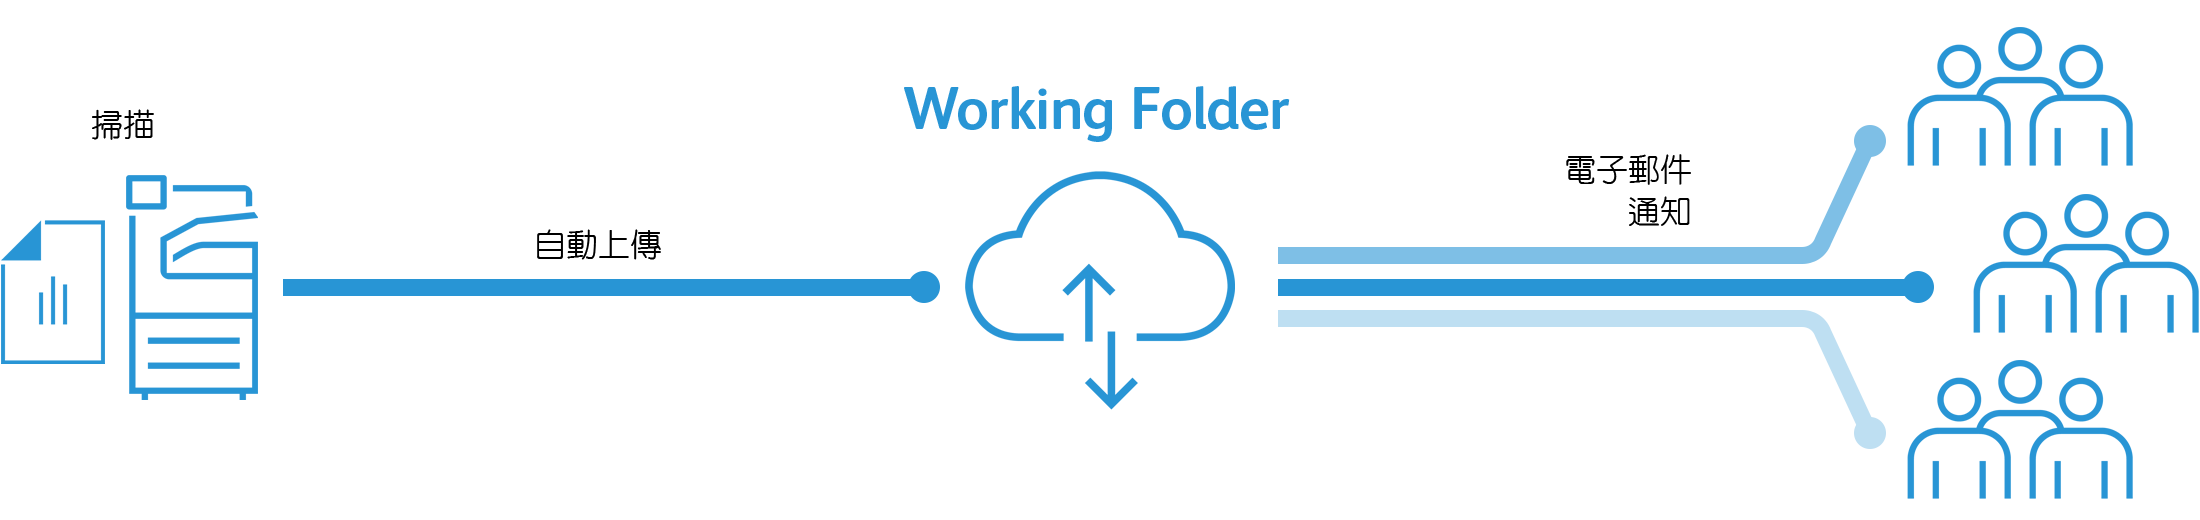 Working Folder